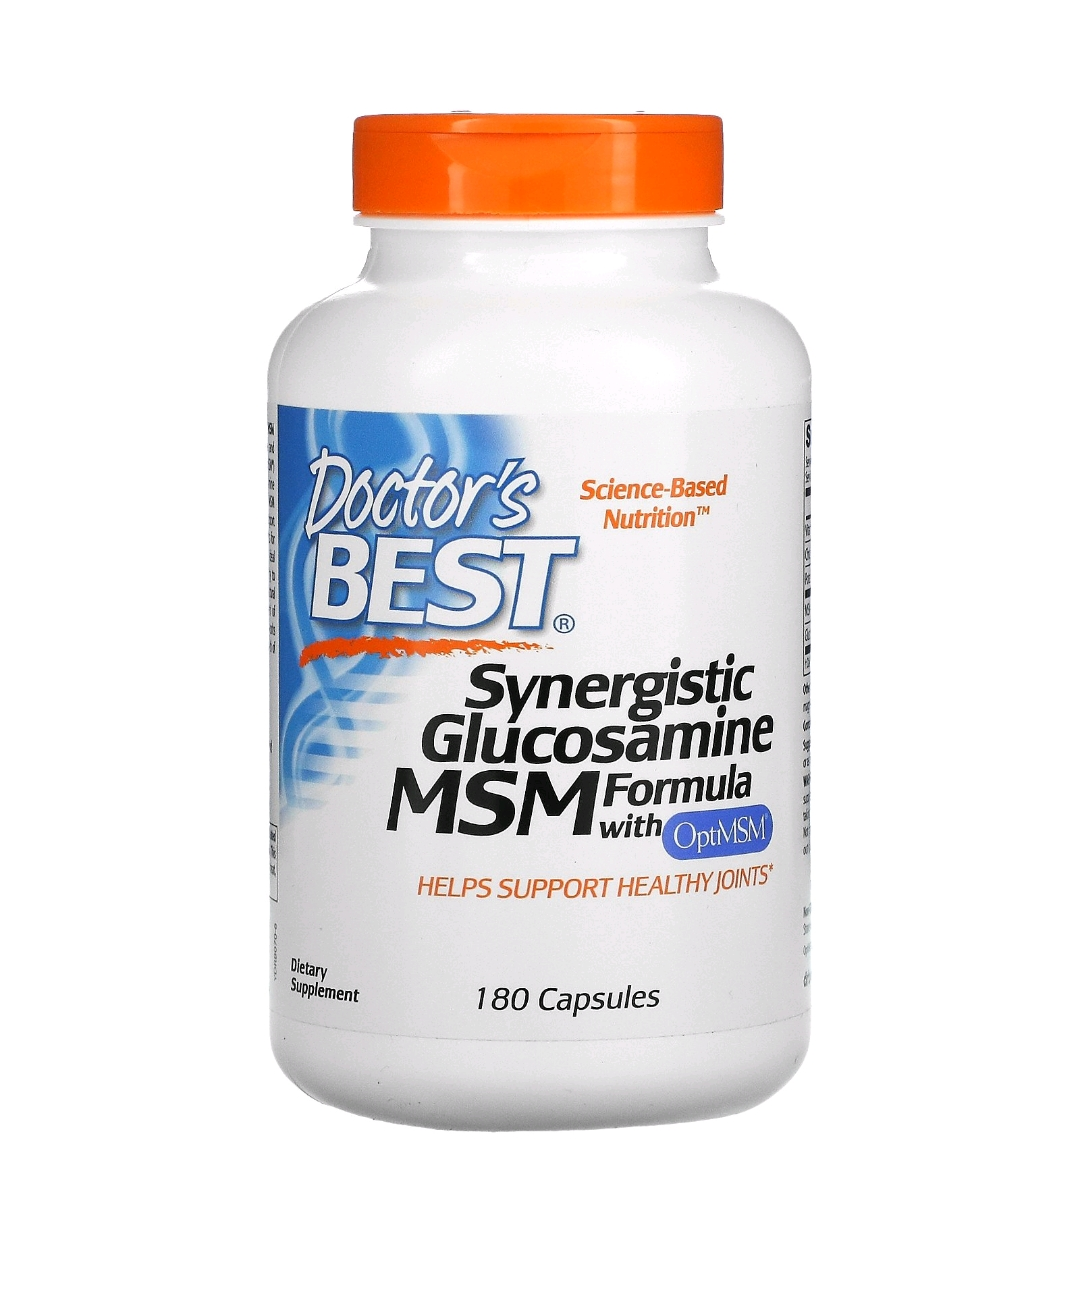 Synergistic Glucosamine MSM Formula with OptiMSM, 180 Capsules